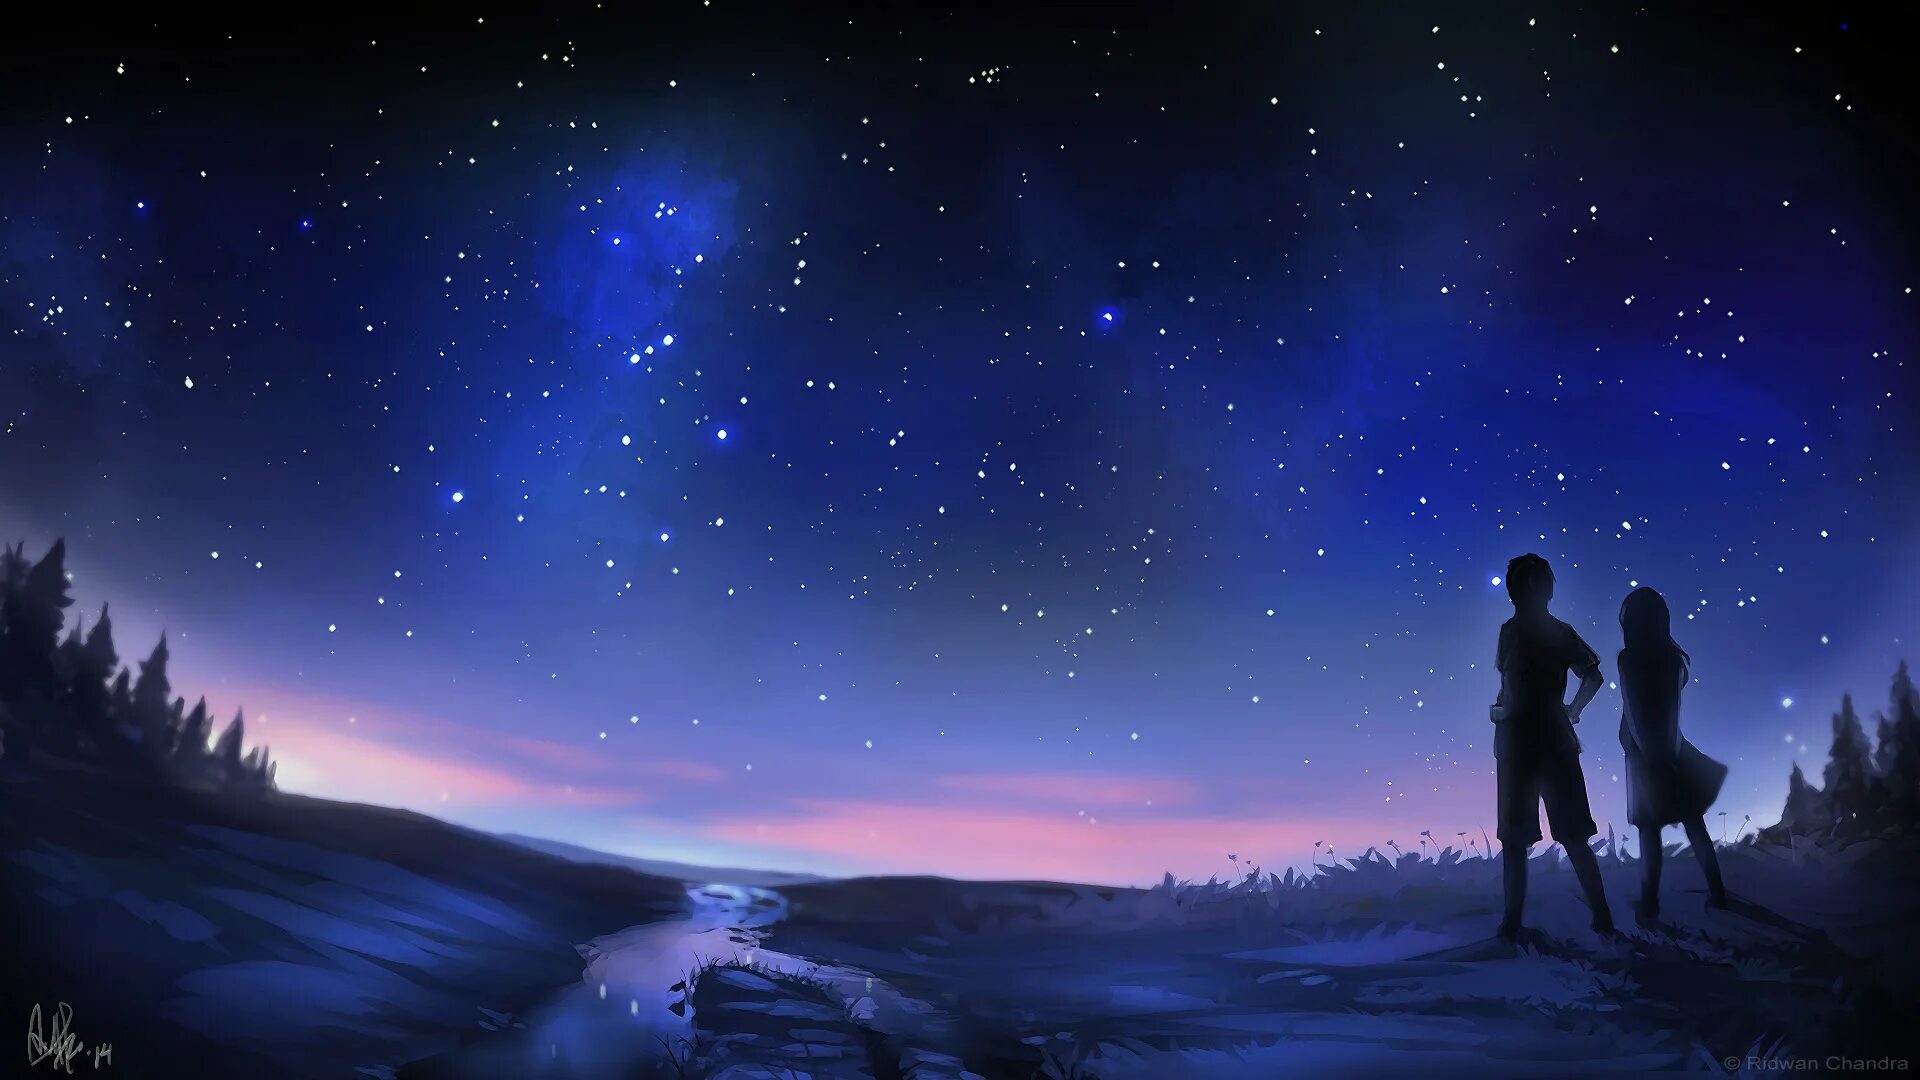 Ария смотрящего на звезды. Звездное небо арт. Ночное небо со звездами. Звездное небо фон. Девушка и звездное небо.